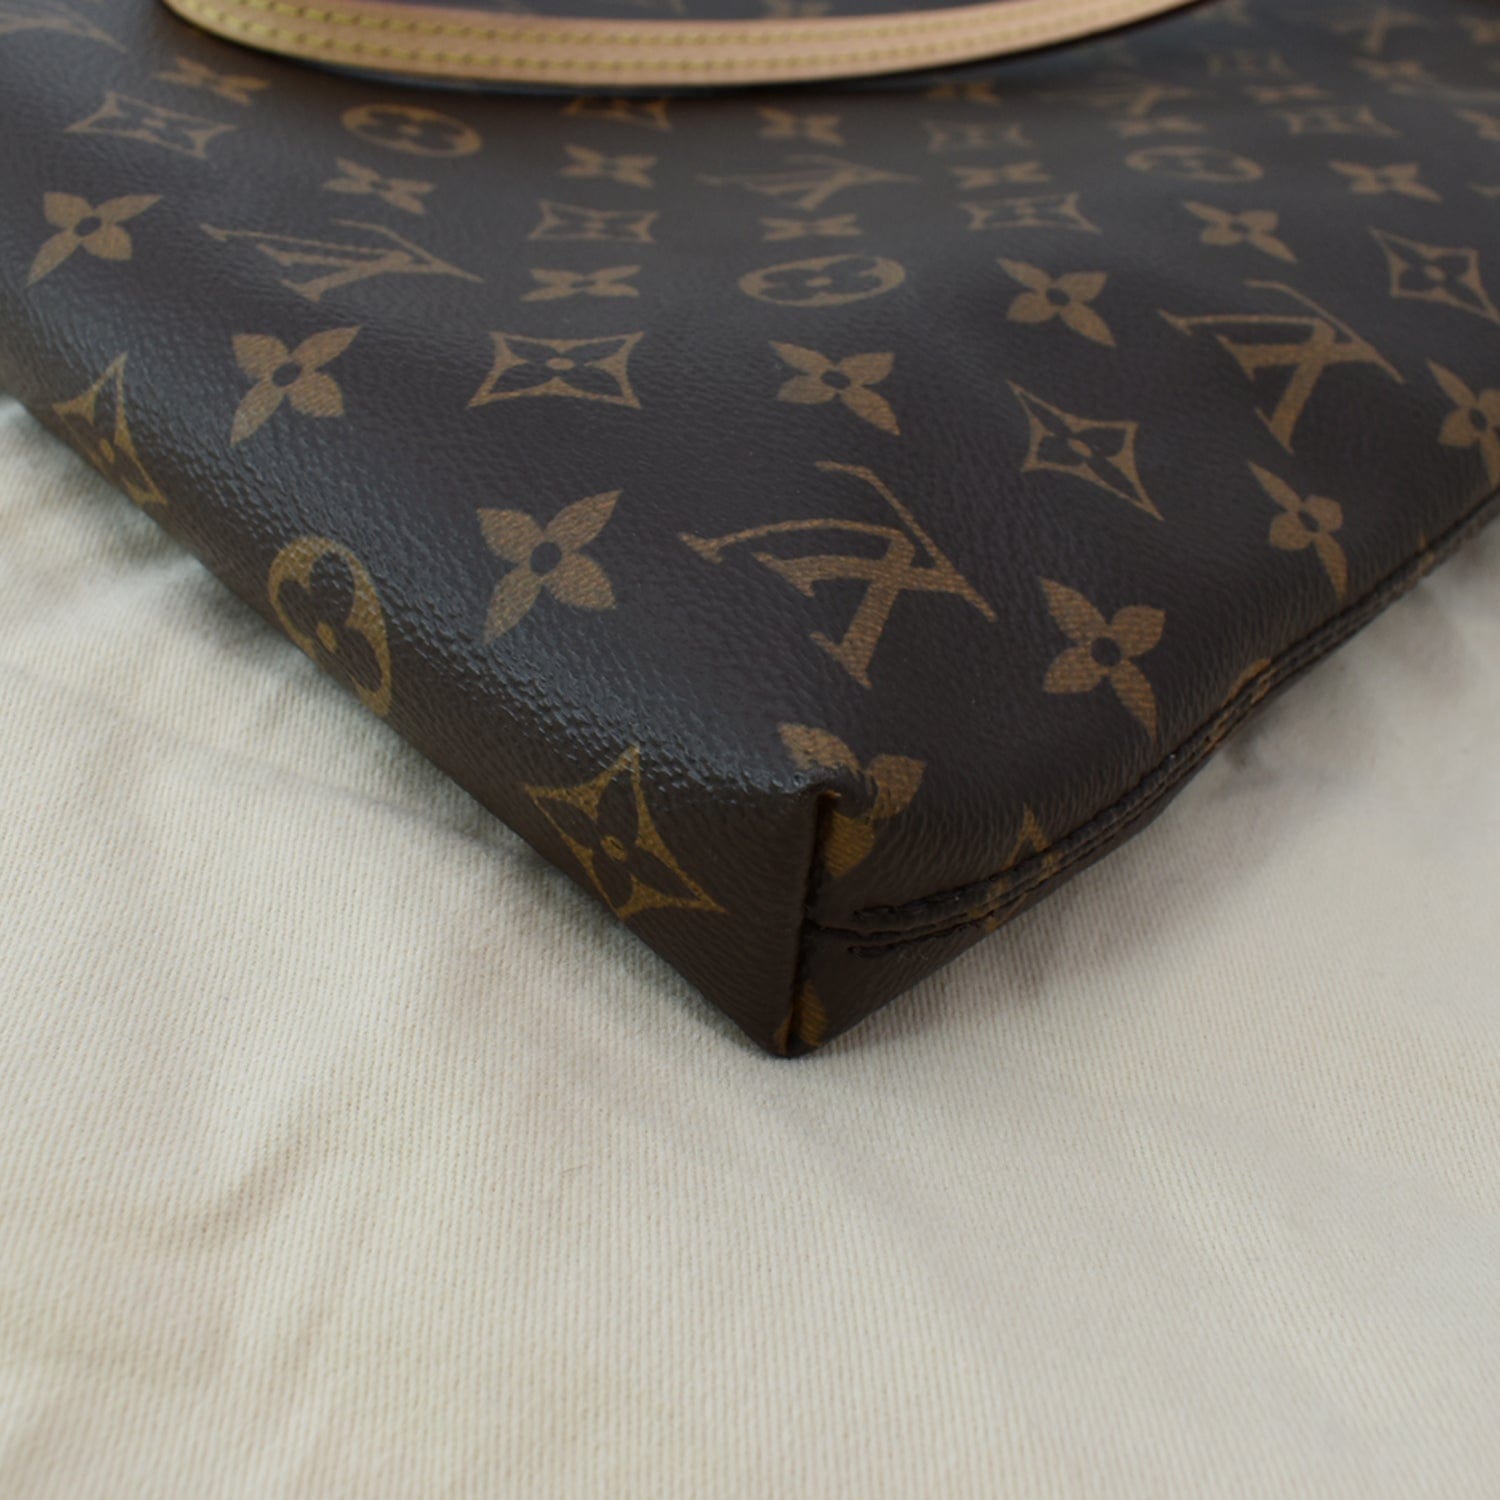 Louis Vuitton Carry It - ShopStyle Tote Bags